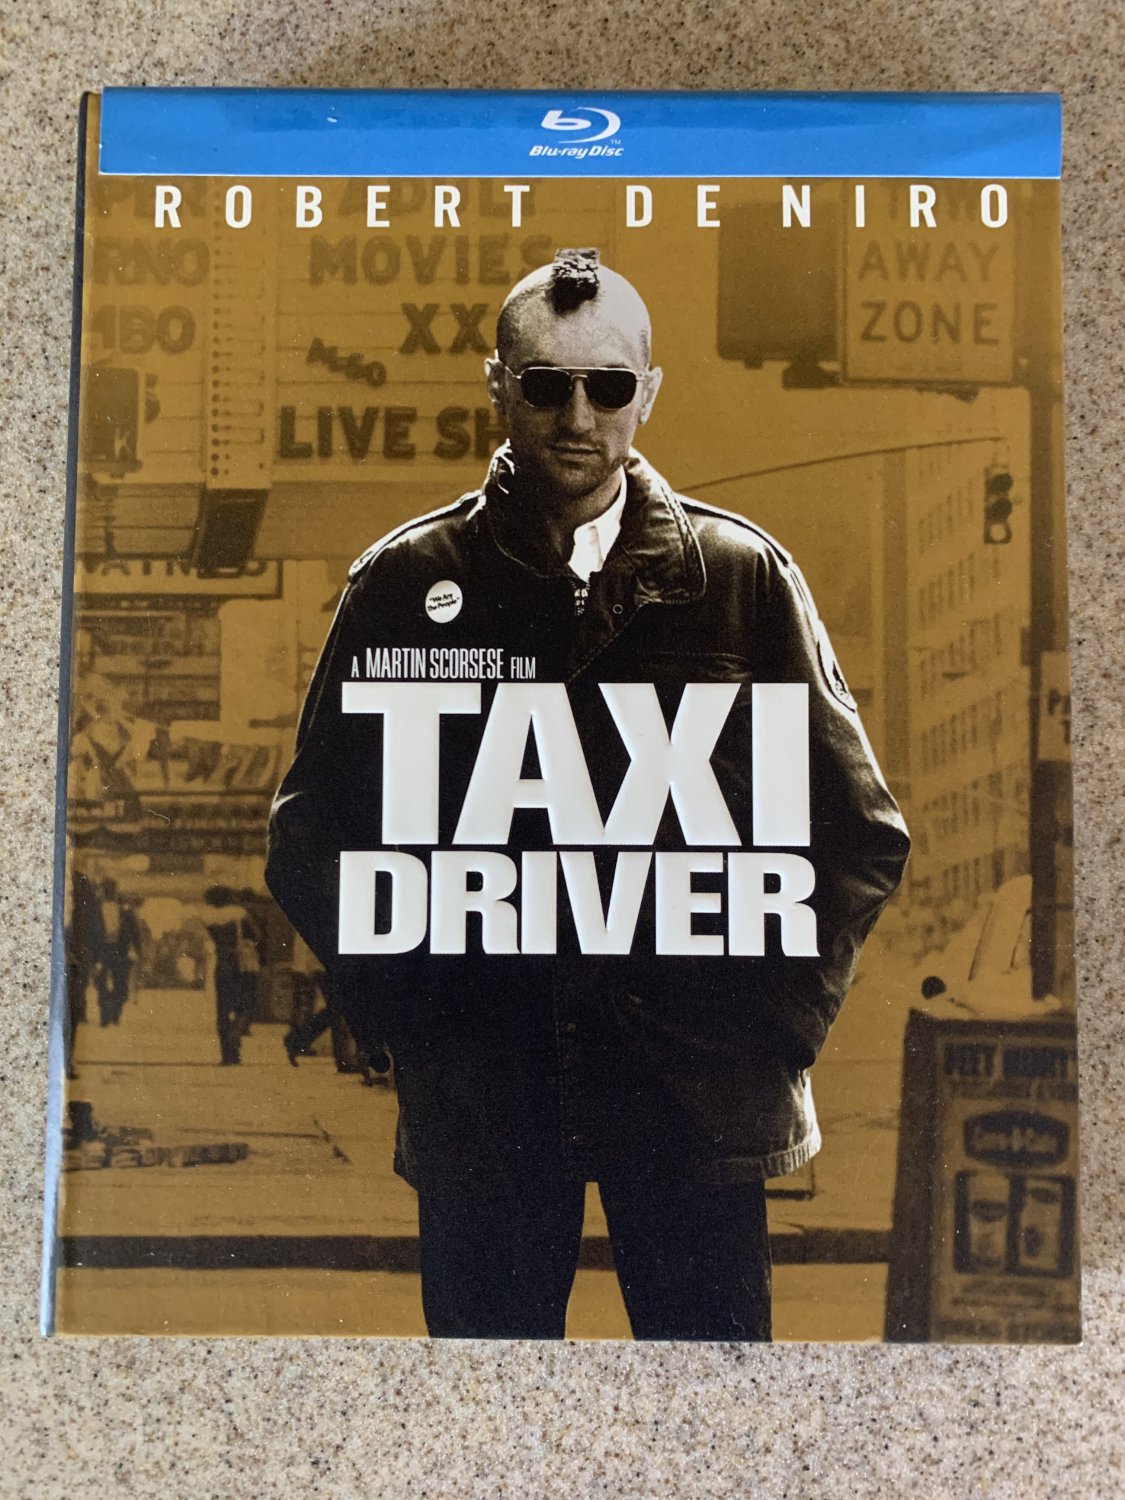 Taxi Driver (Blu-ray, 2011) LIKE NEW, 1976, Martin Scorsese, Robert De Niro